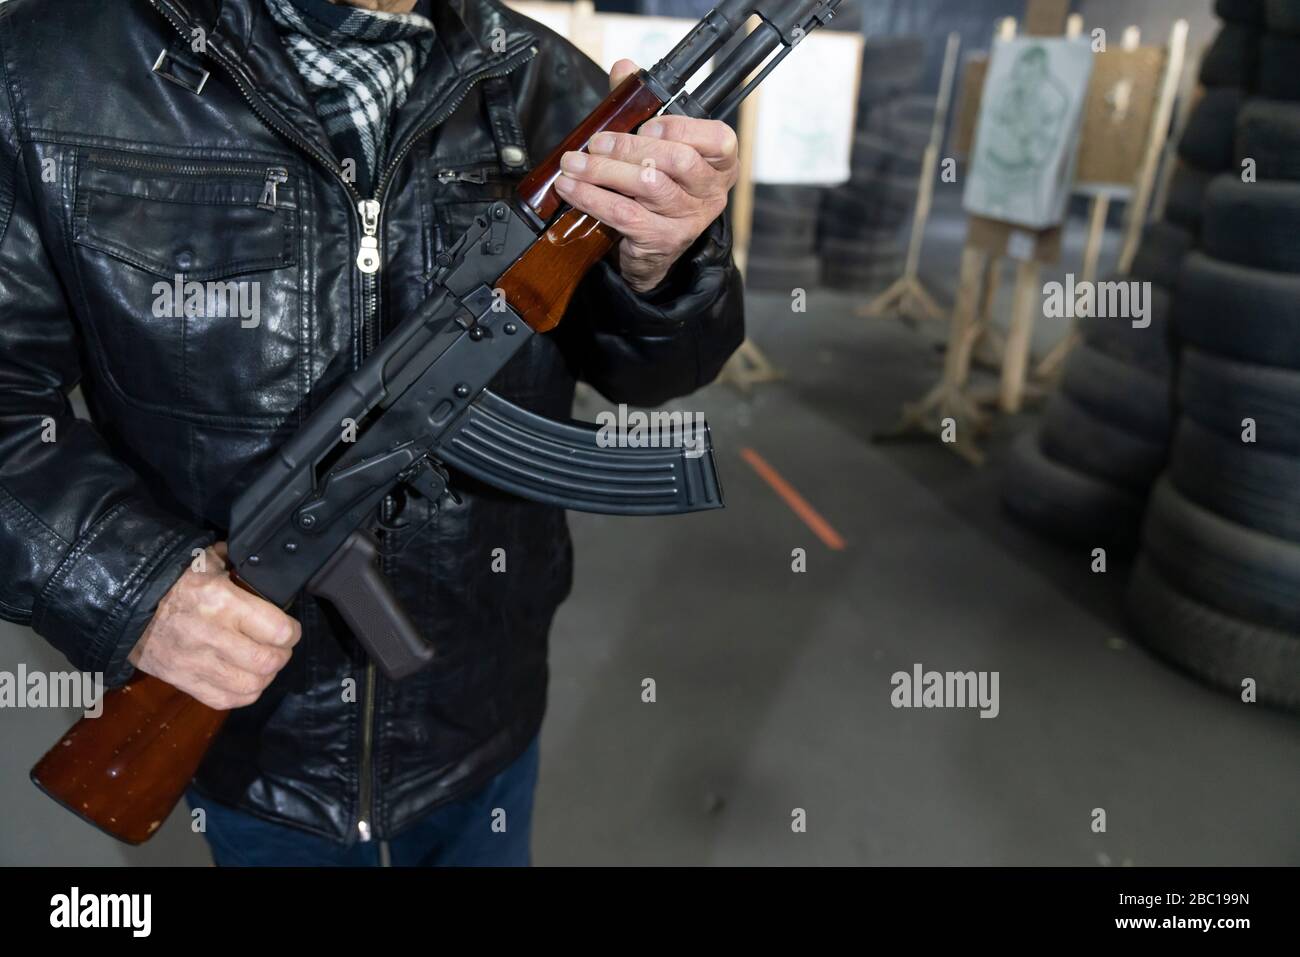 Crop view of senior man with a gun in shooting range Stock Photo